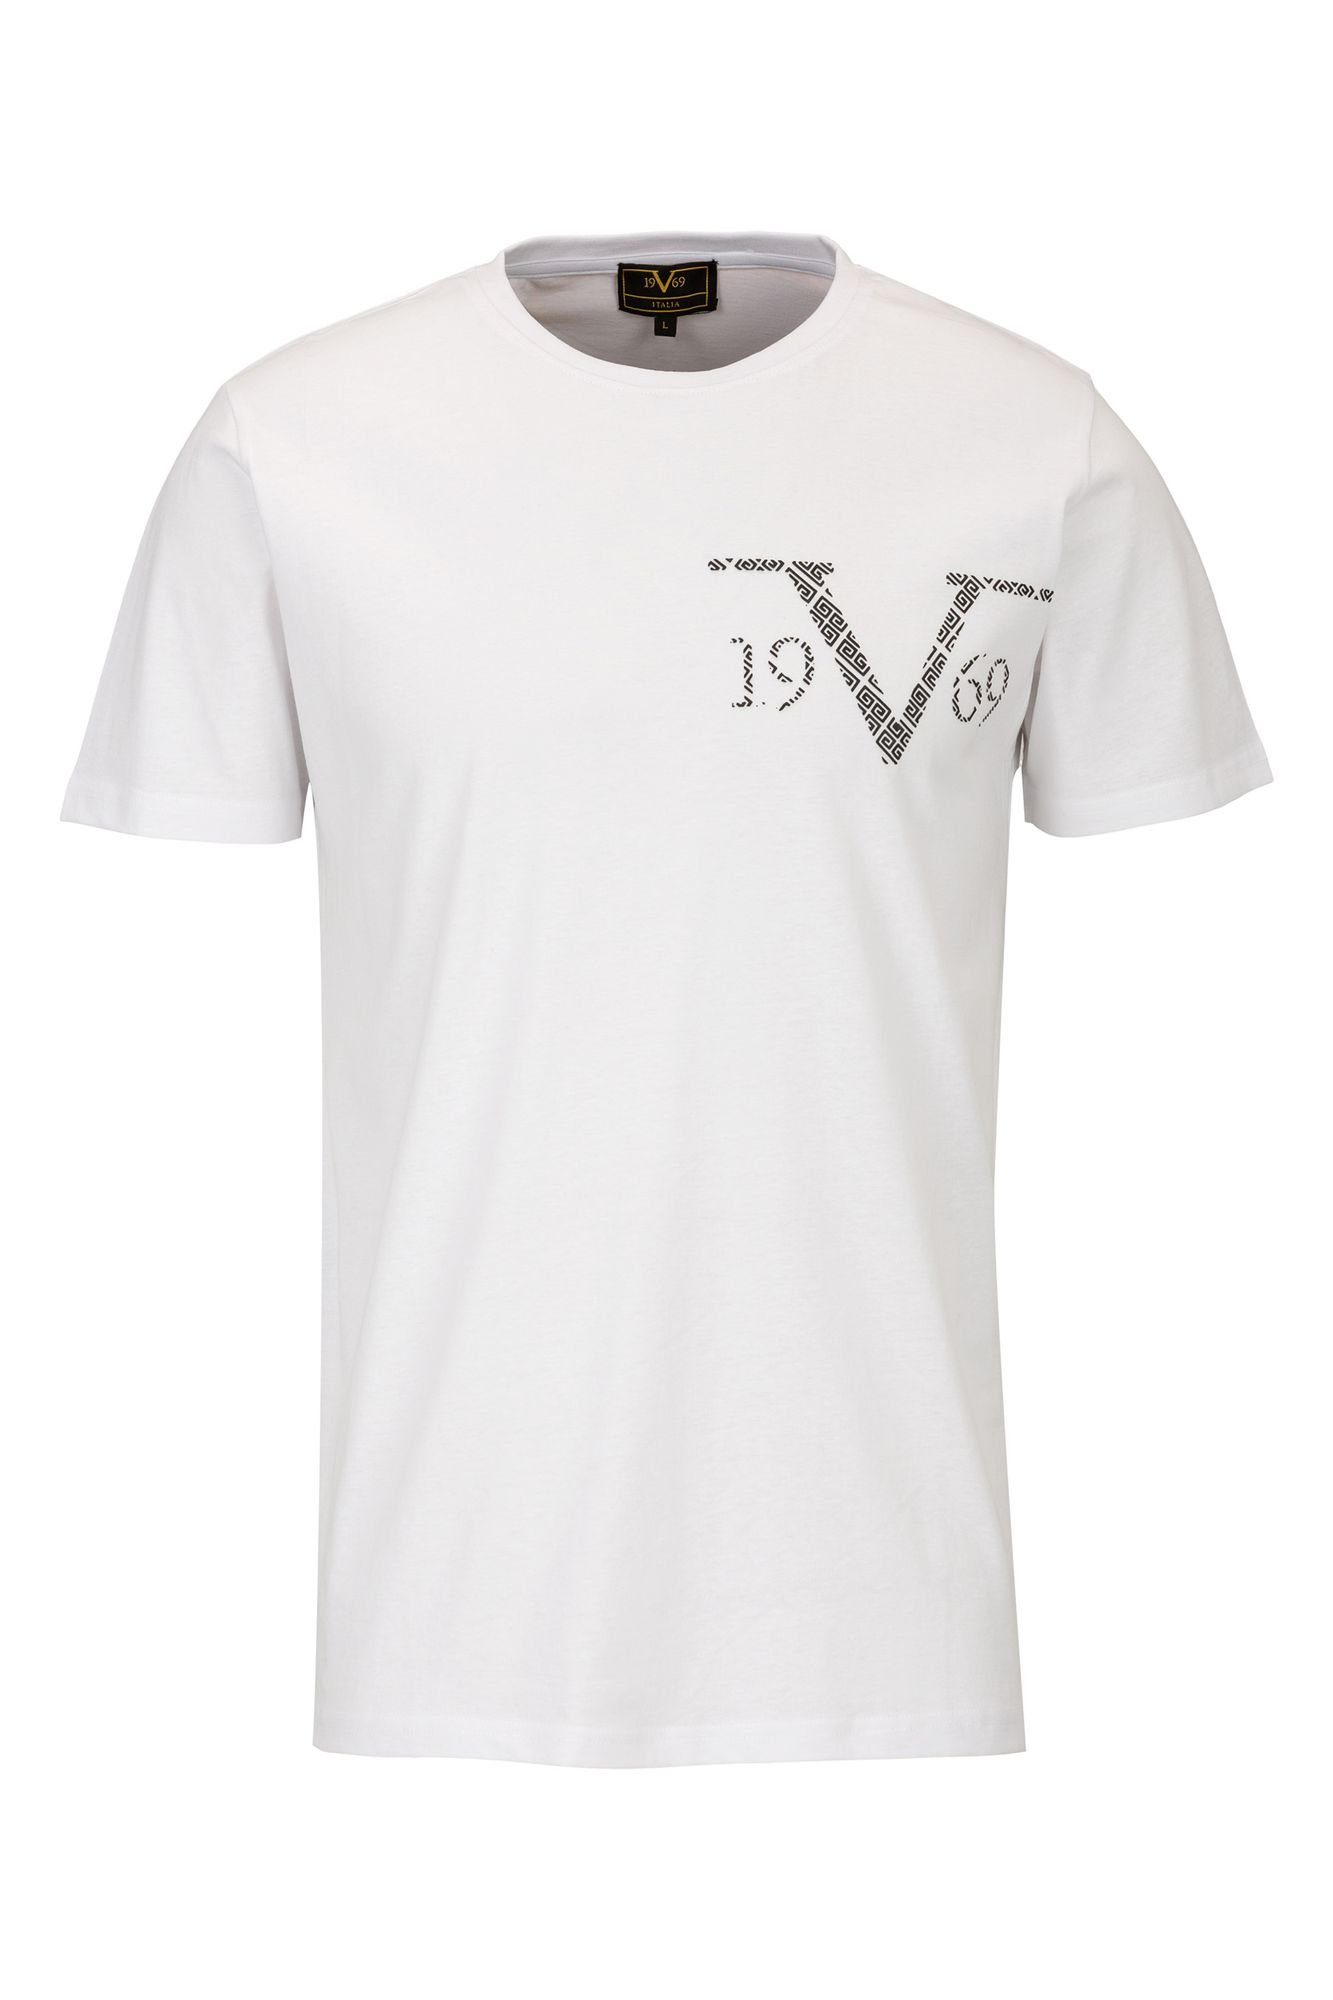 T-Shirt 19V69 Nicolo Versace Italia by